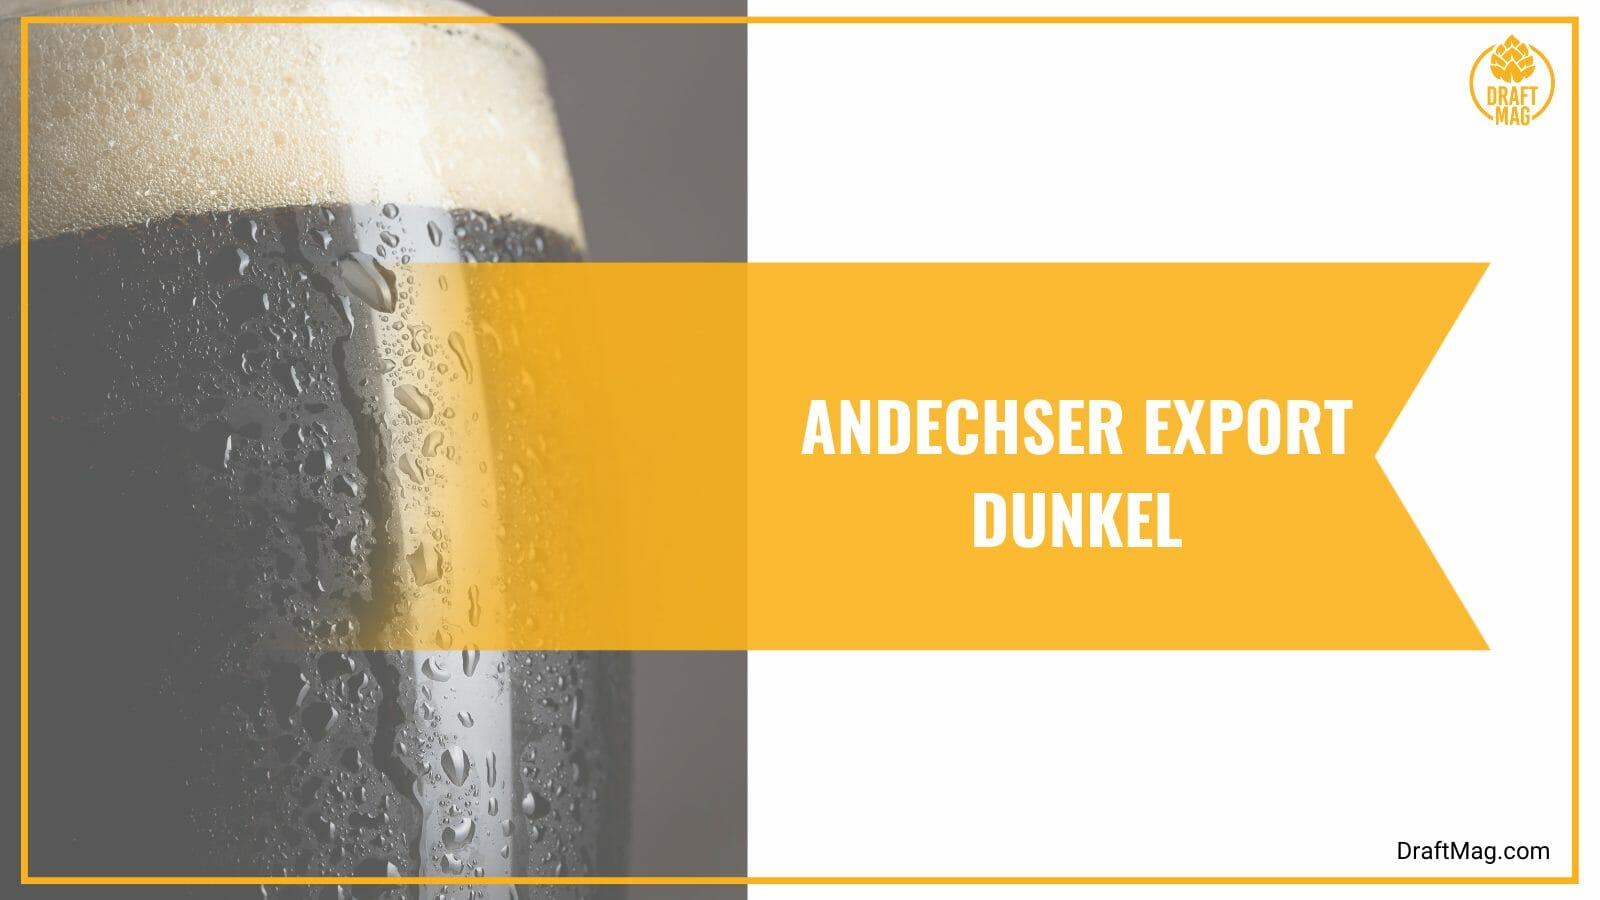 Andechser export dunkel with nutrients